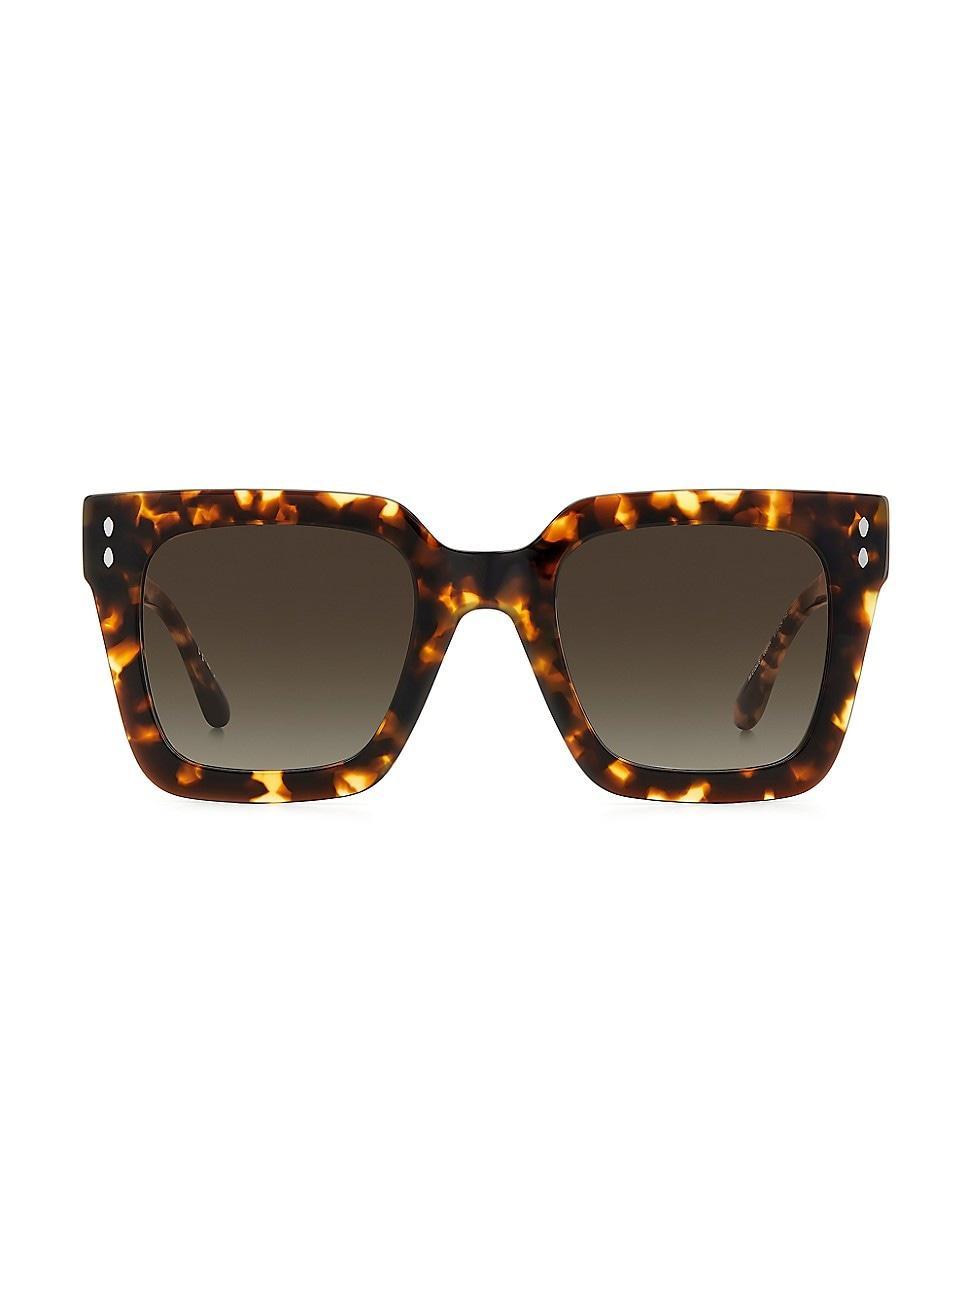 Isabel Marant 51mm Square Sunglasses Product Image